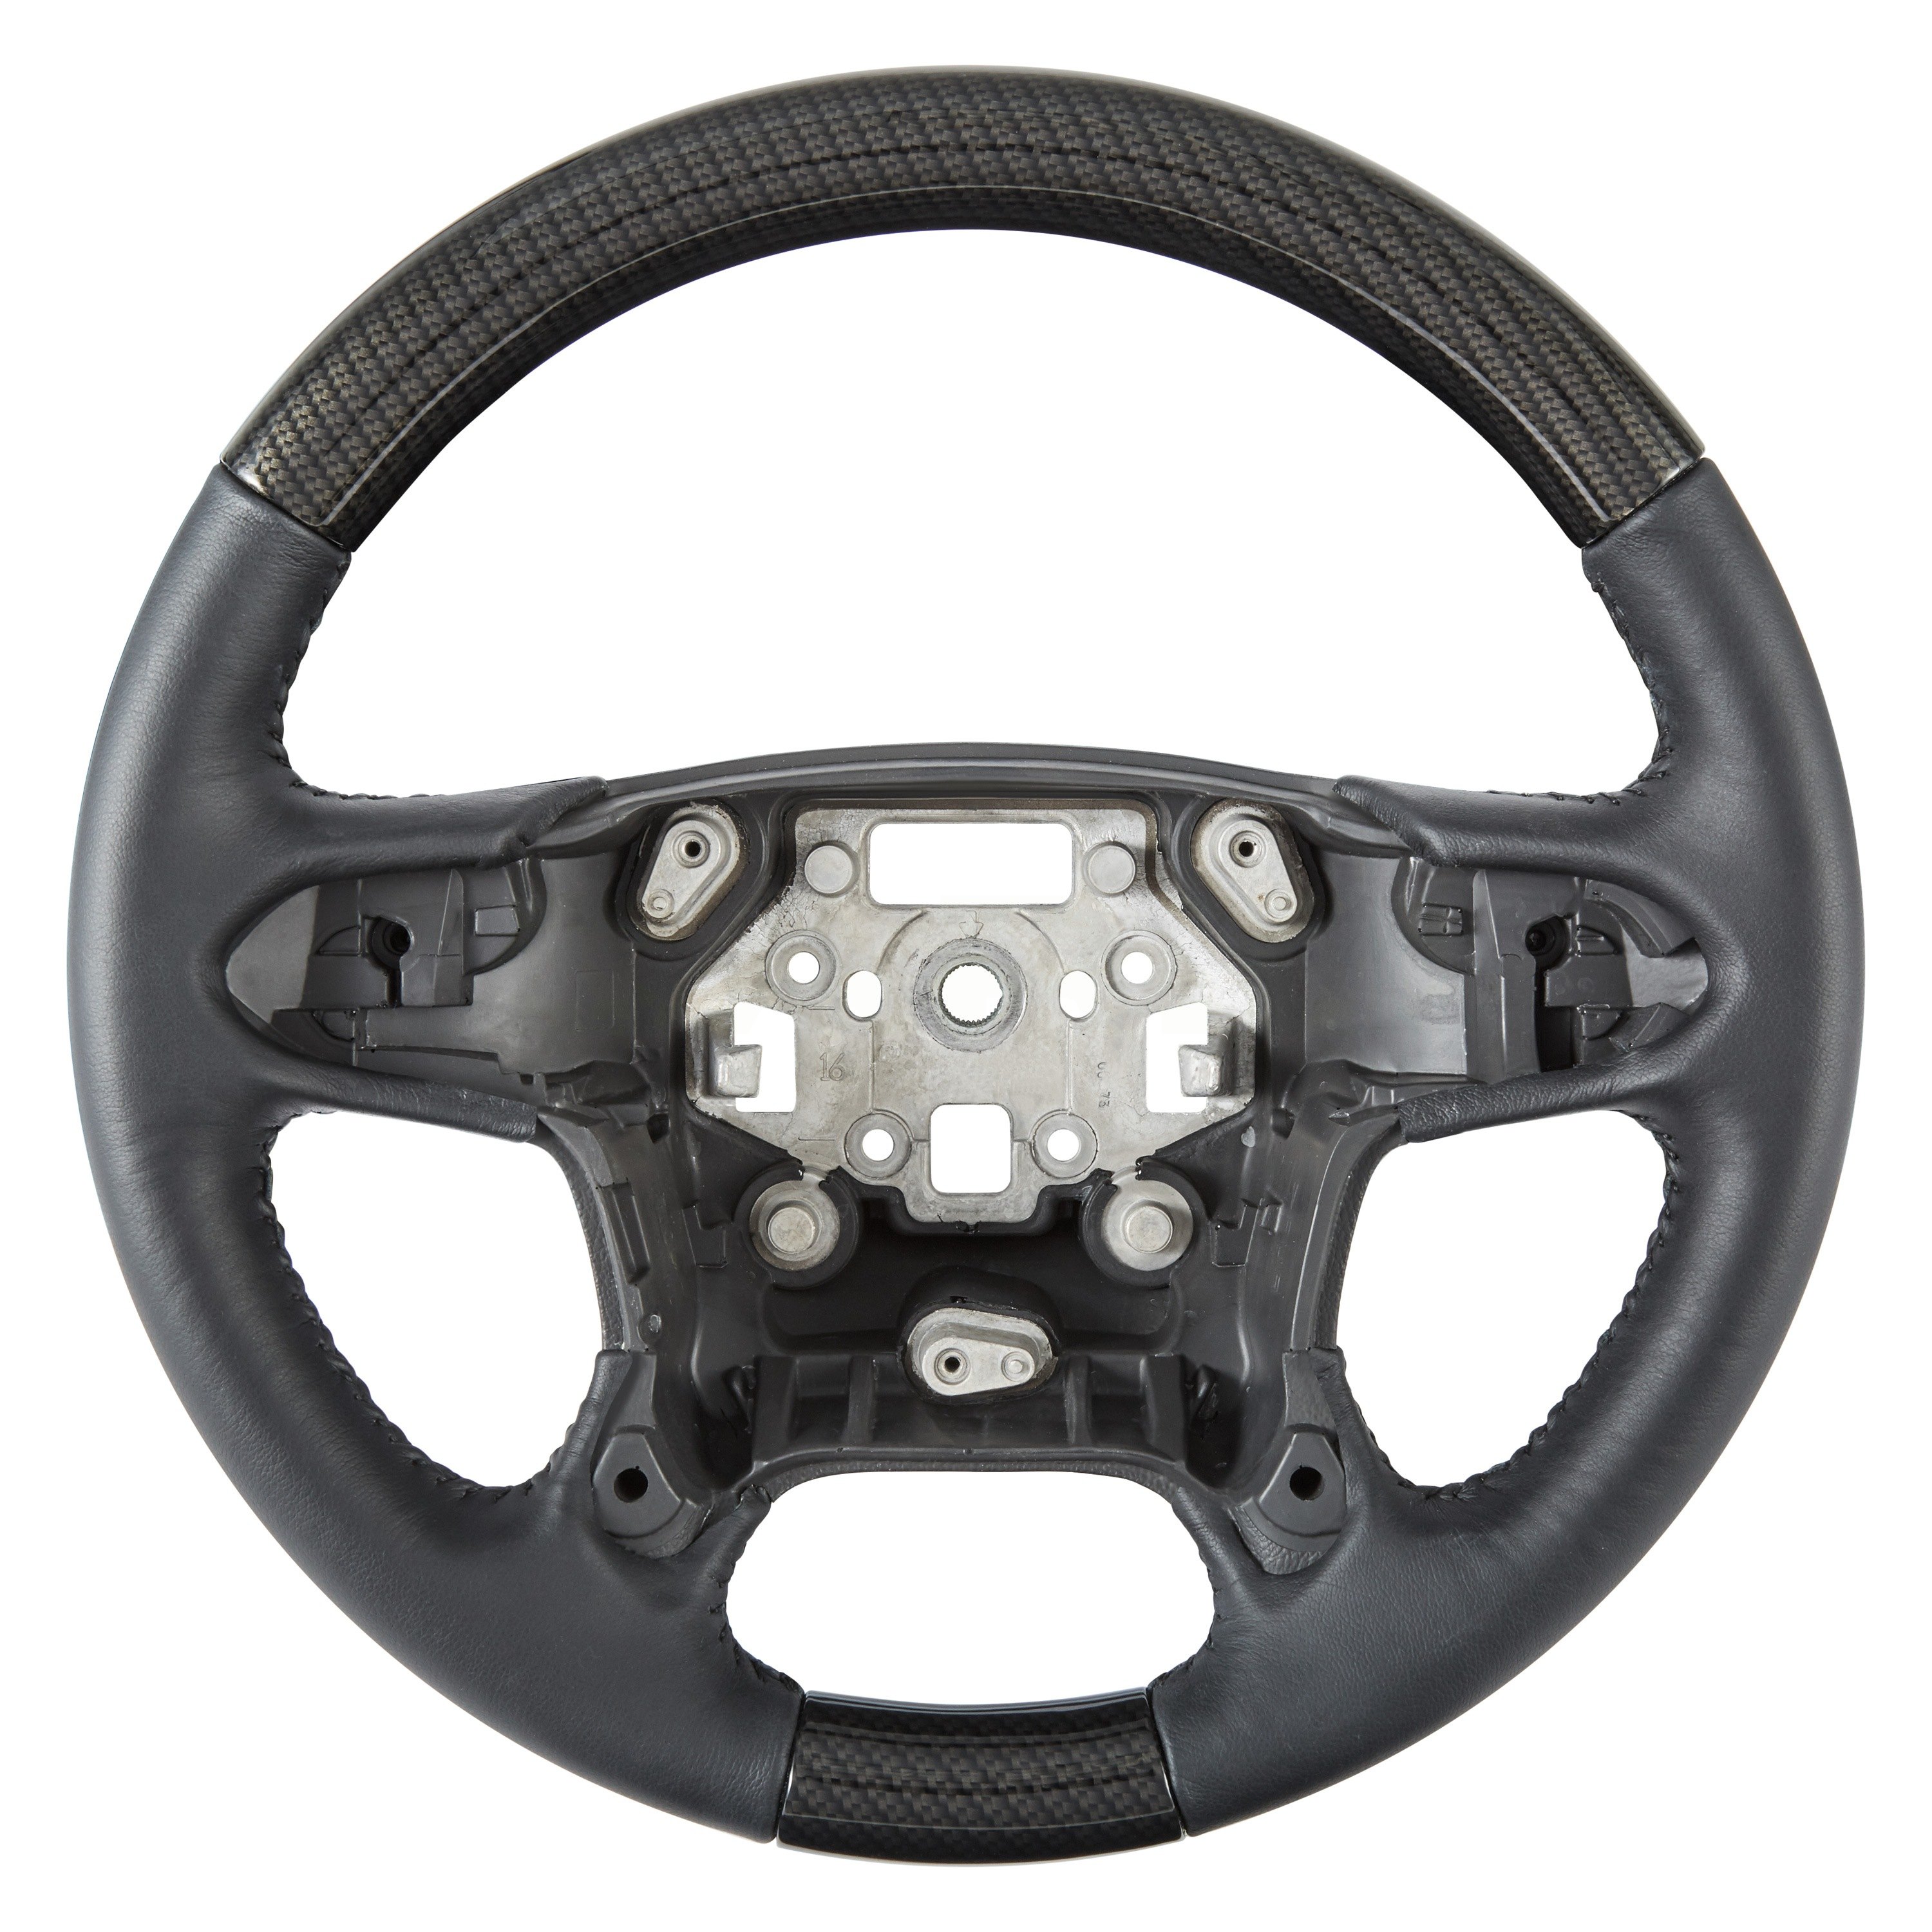 Steering wheel photo